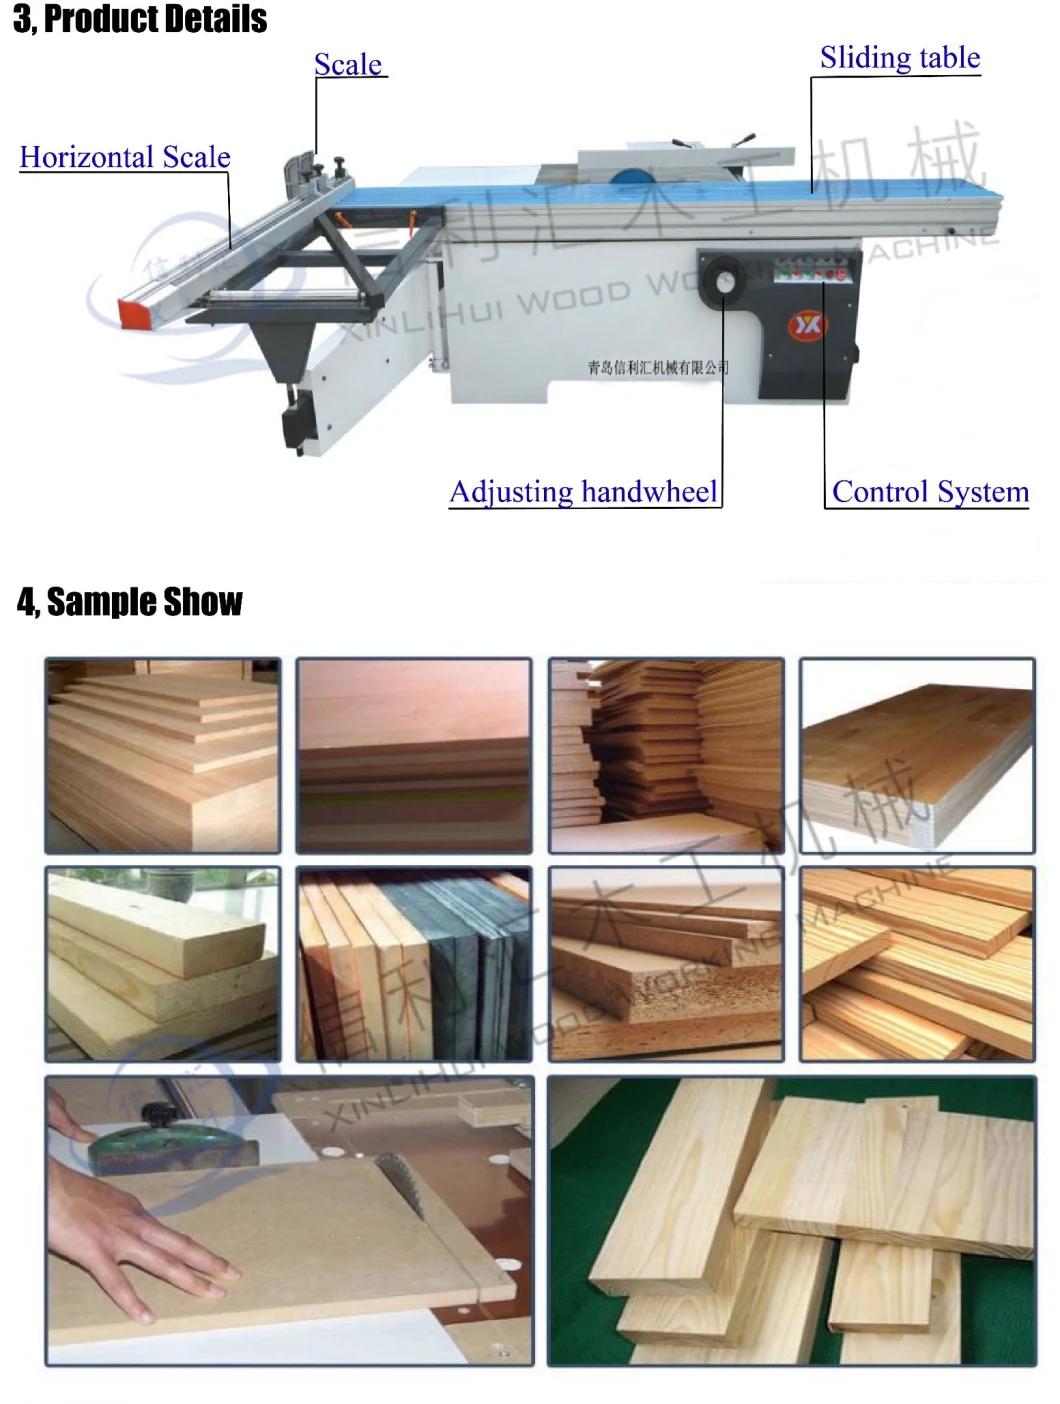 0-45 Degree Precision Wood Cutting Sliding Table Saw Machine CNC Plywood Cutting/ Manual Wood Cutting Machine MDF Board Cutting Machine